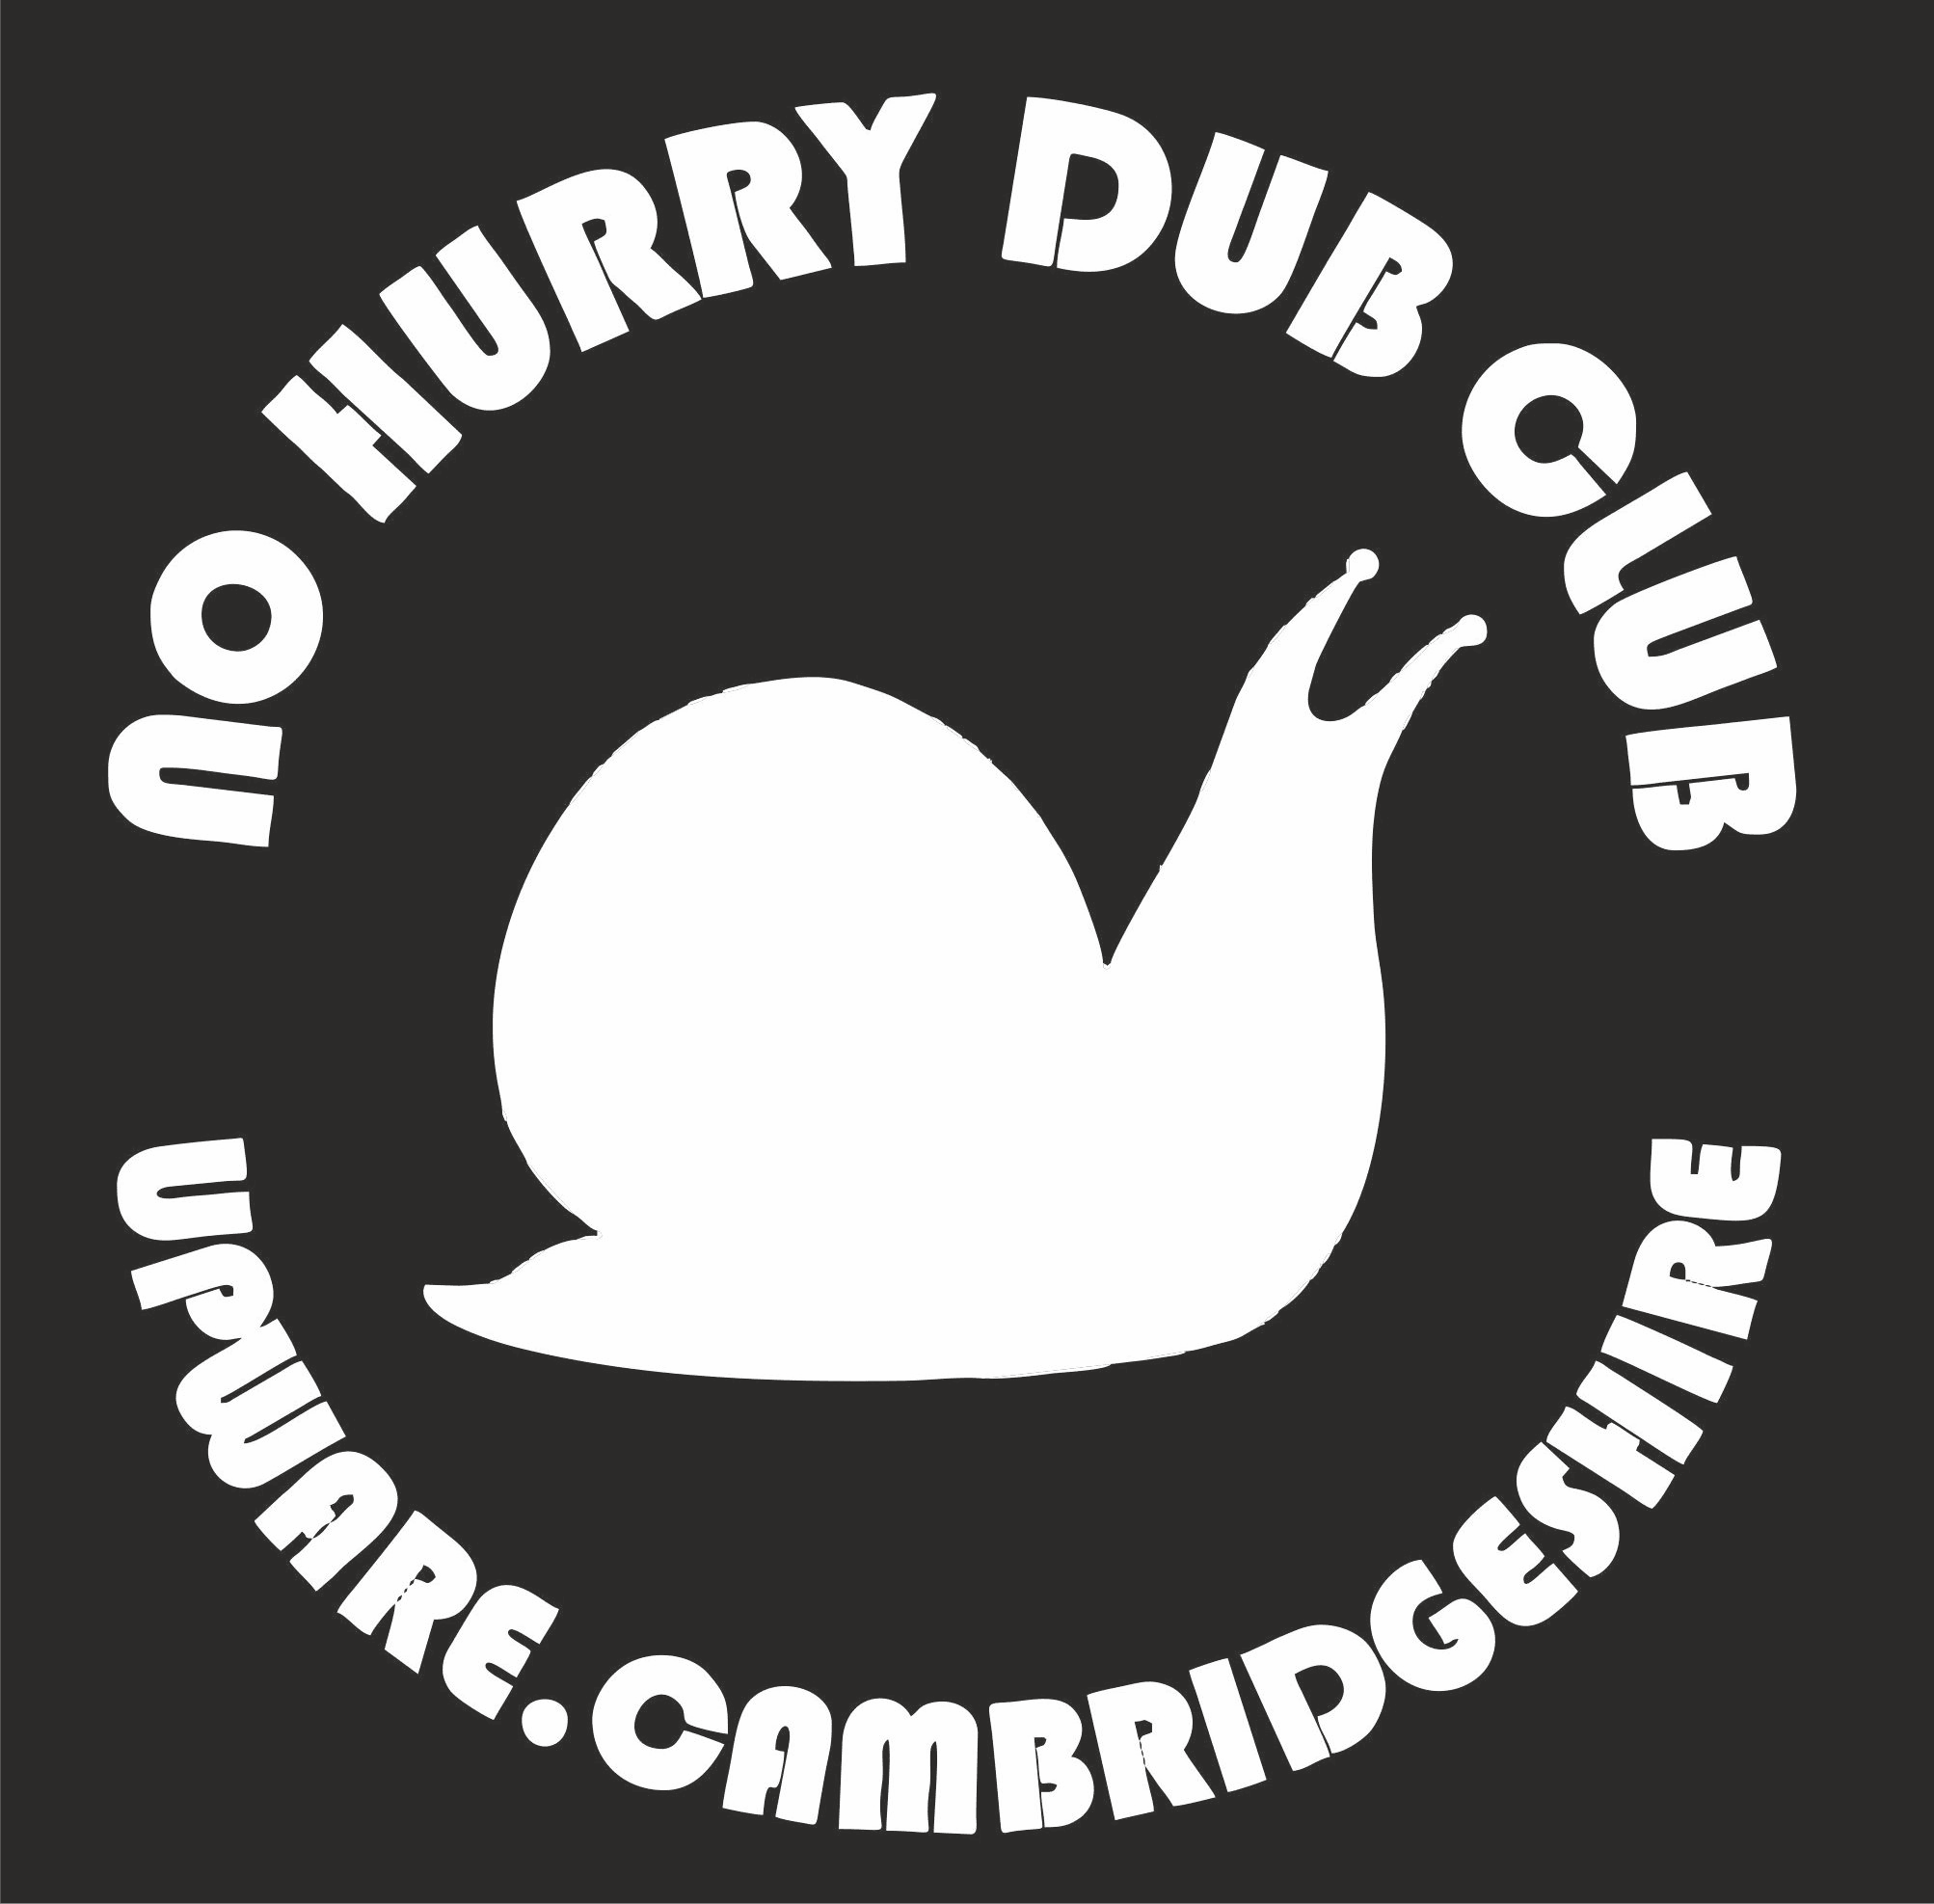 No_Hurry_Dub_Club logo sigma embroidery